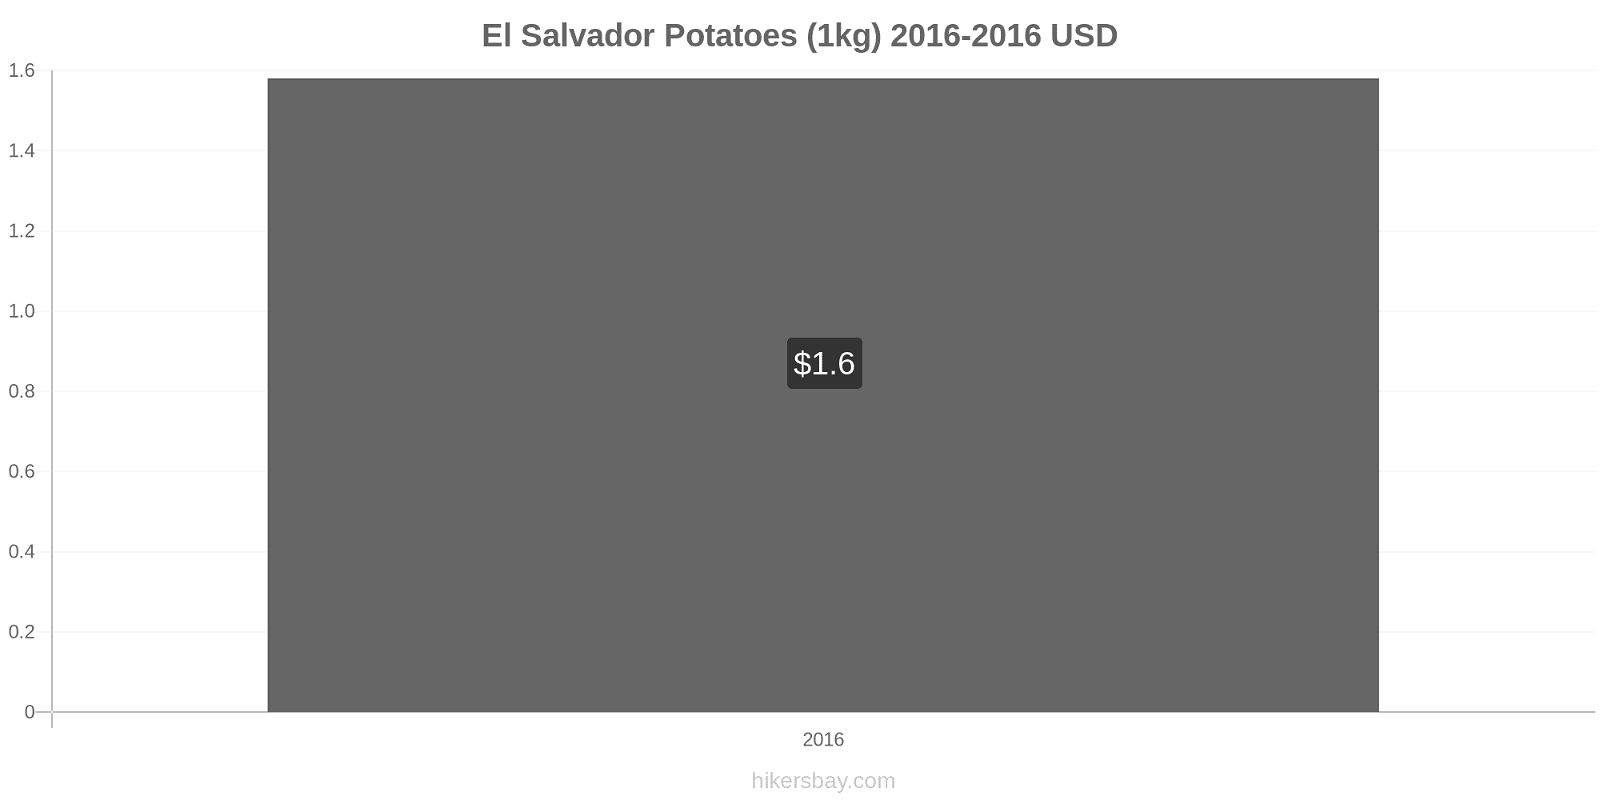 El Salvador price changes Potatoes (1kg) hikersbay.com